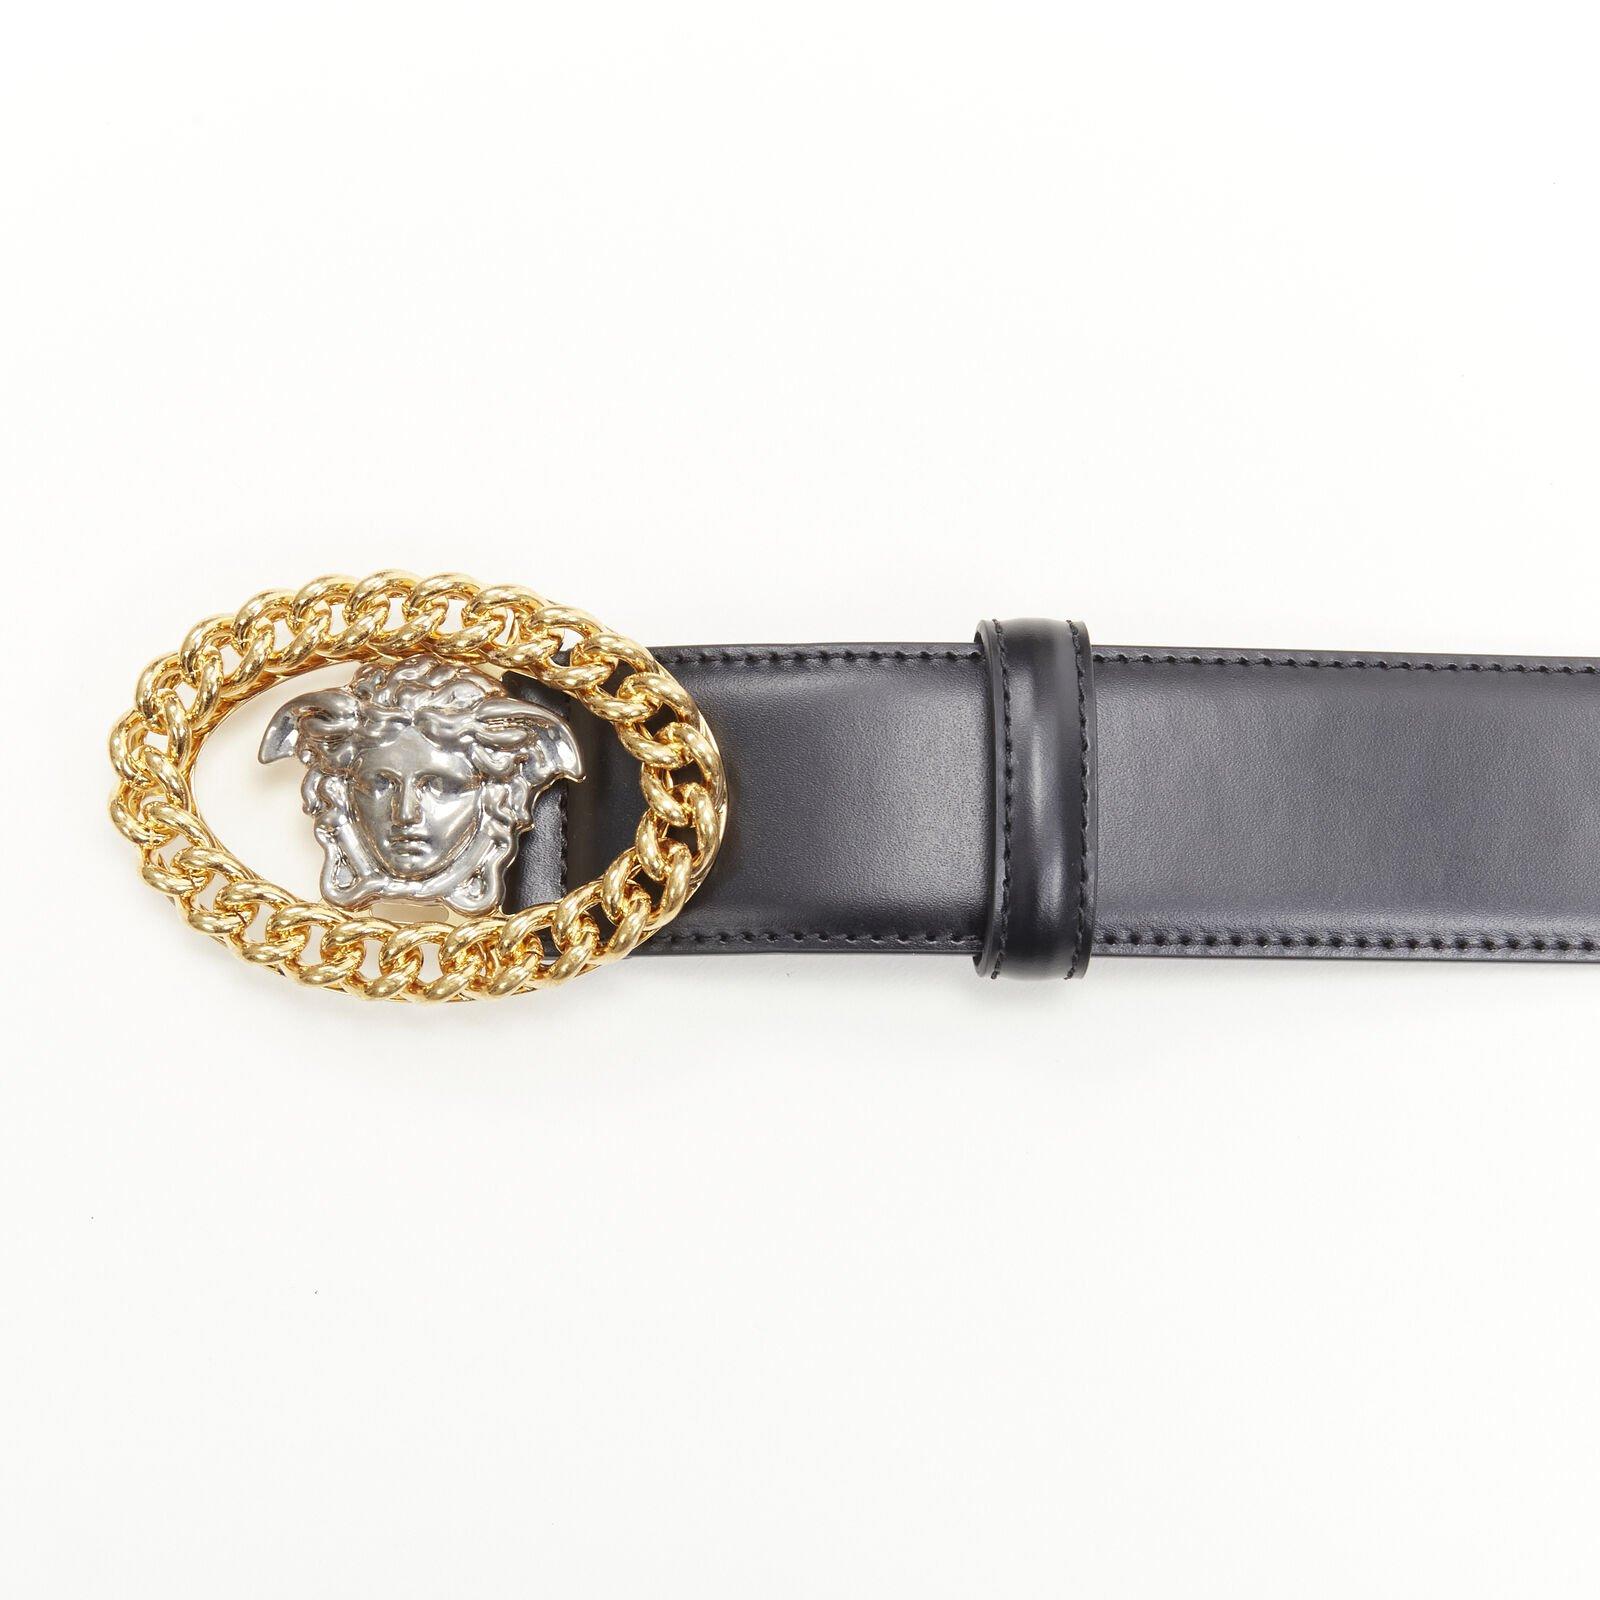 VERSACE Runway Medusa gold chain silver buckle leather belt 100cm 38-42